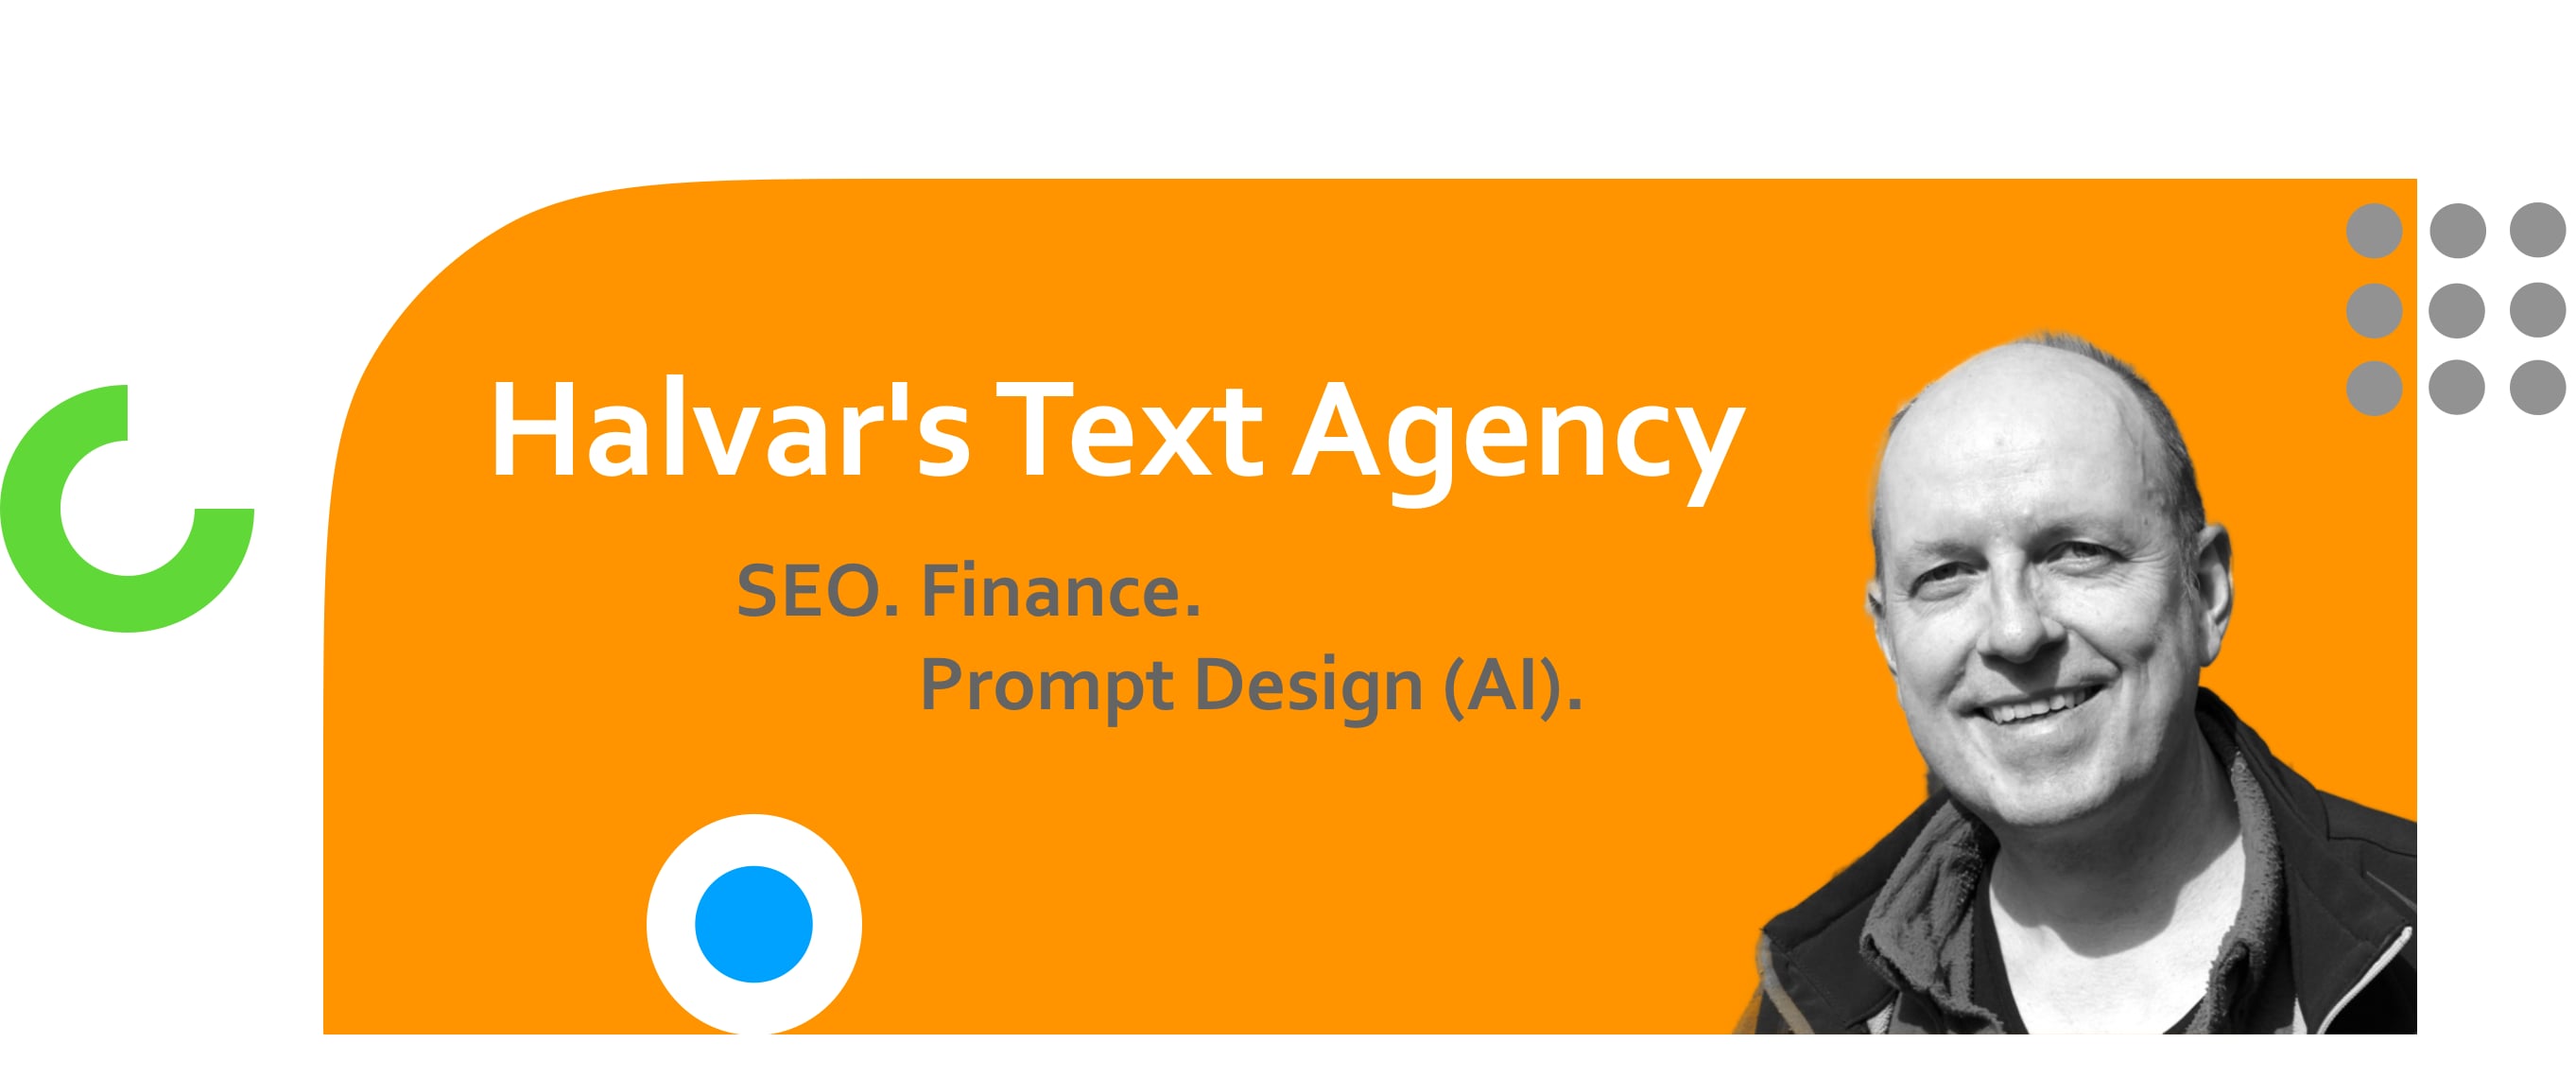 Halvar's Text Agency – SEO-Finanztexter & Prompt Design